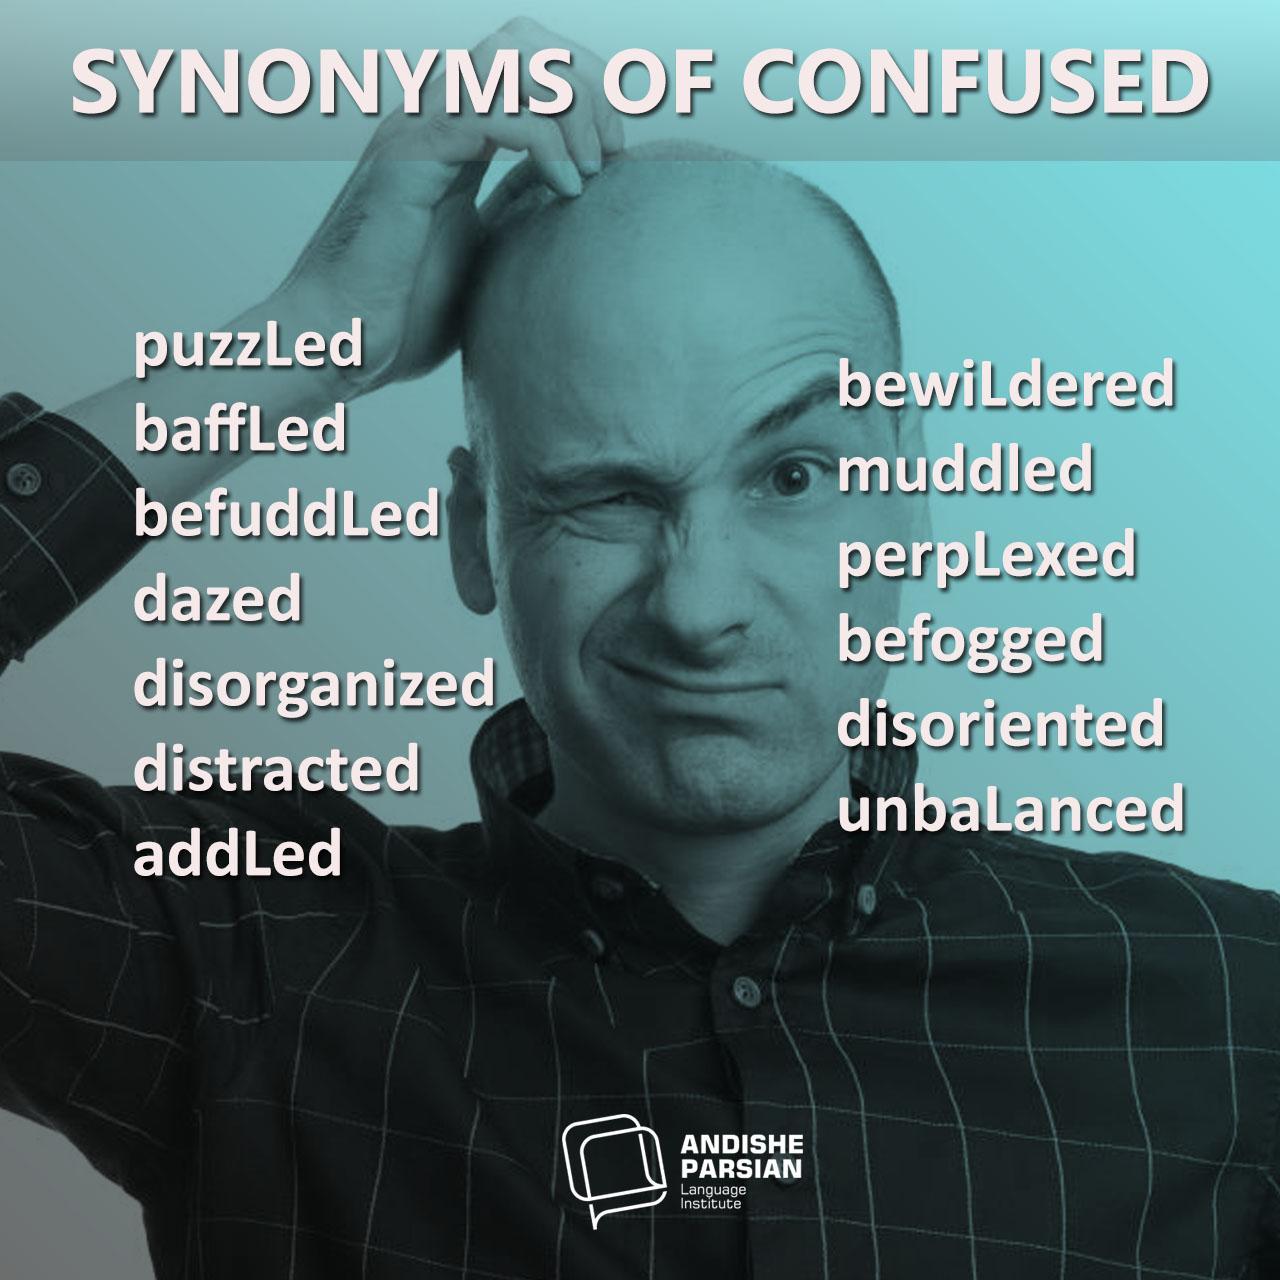 Synonyms of confused | آموزشگاه زبان اندیشه پارسیان
